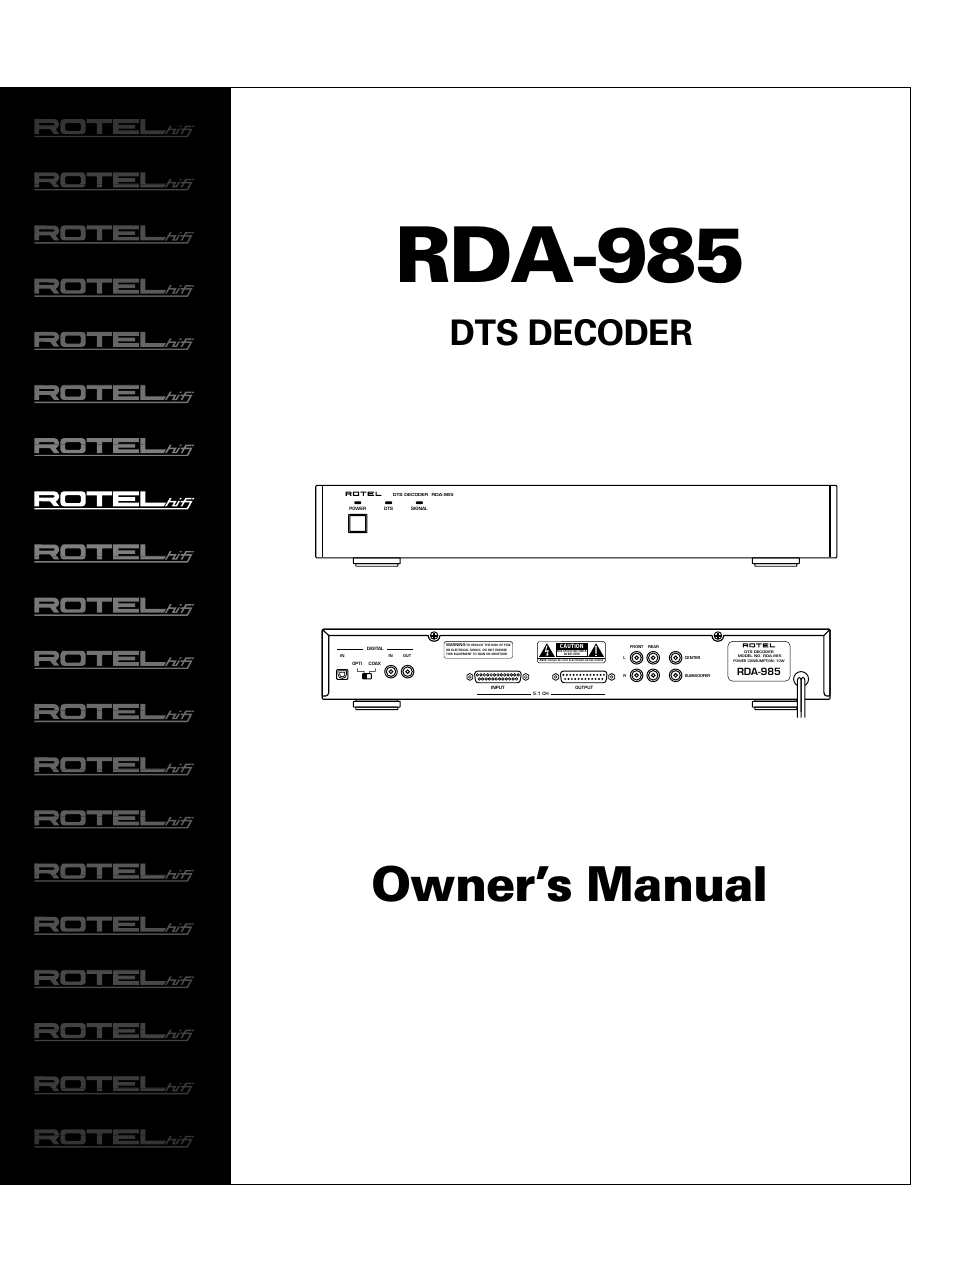 DTS Decoder RDA-985